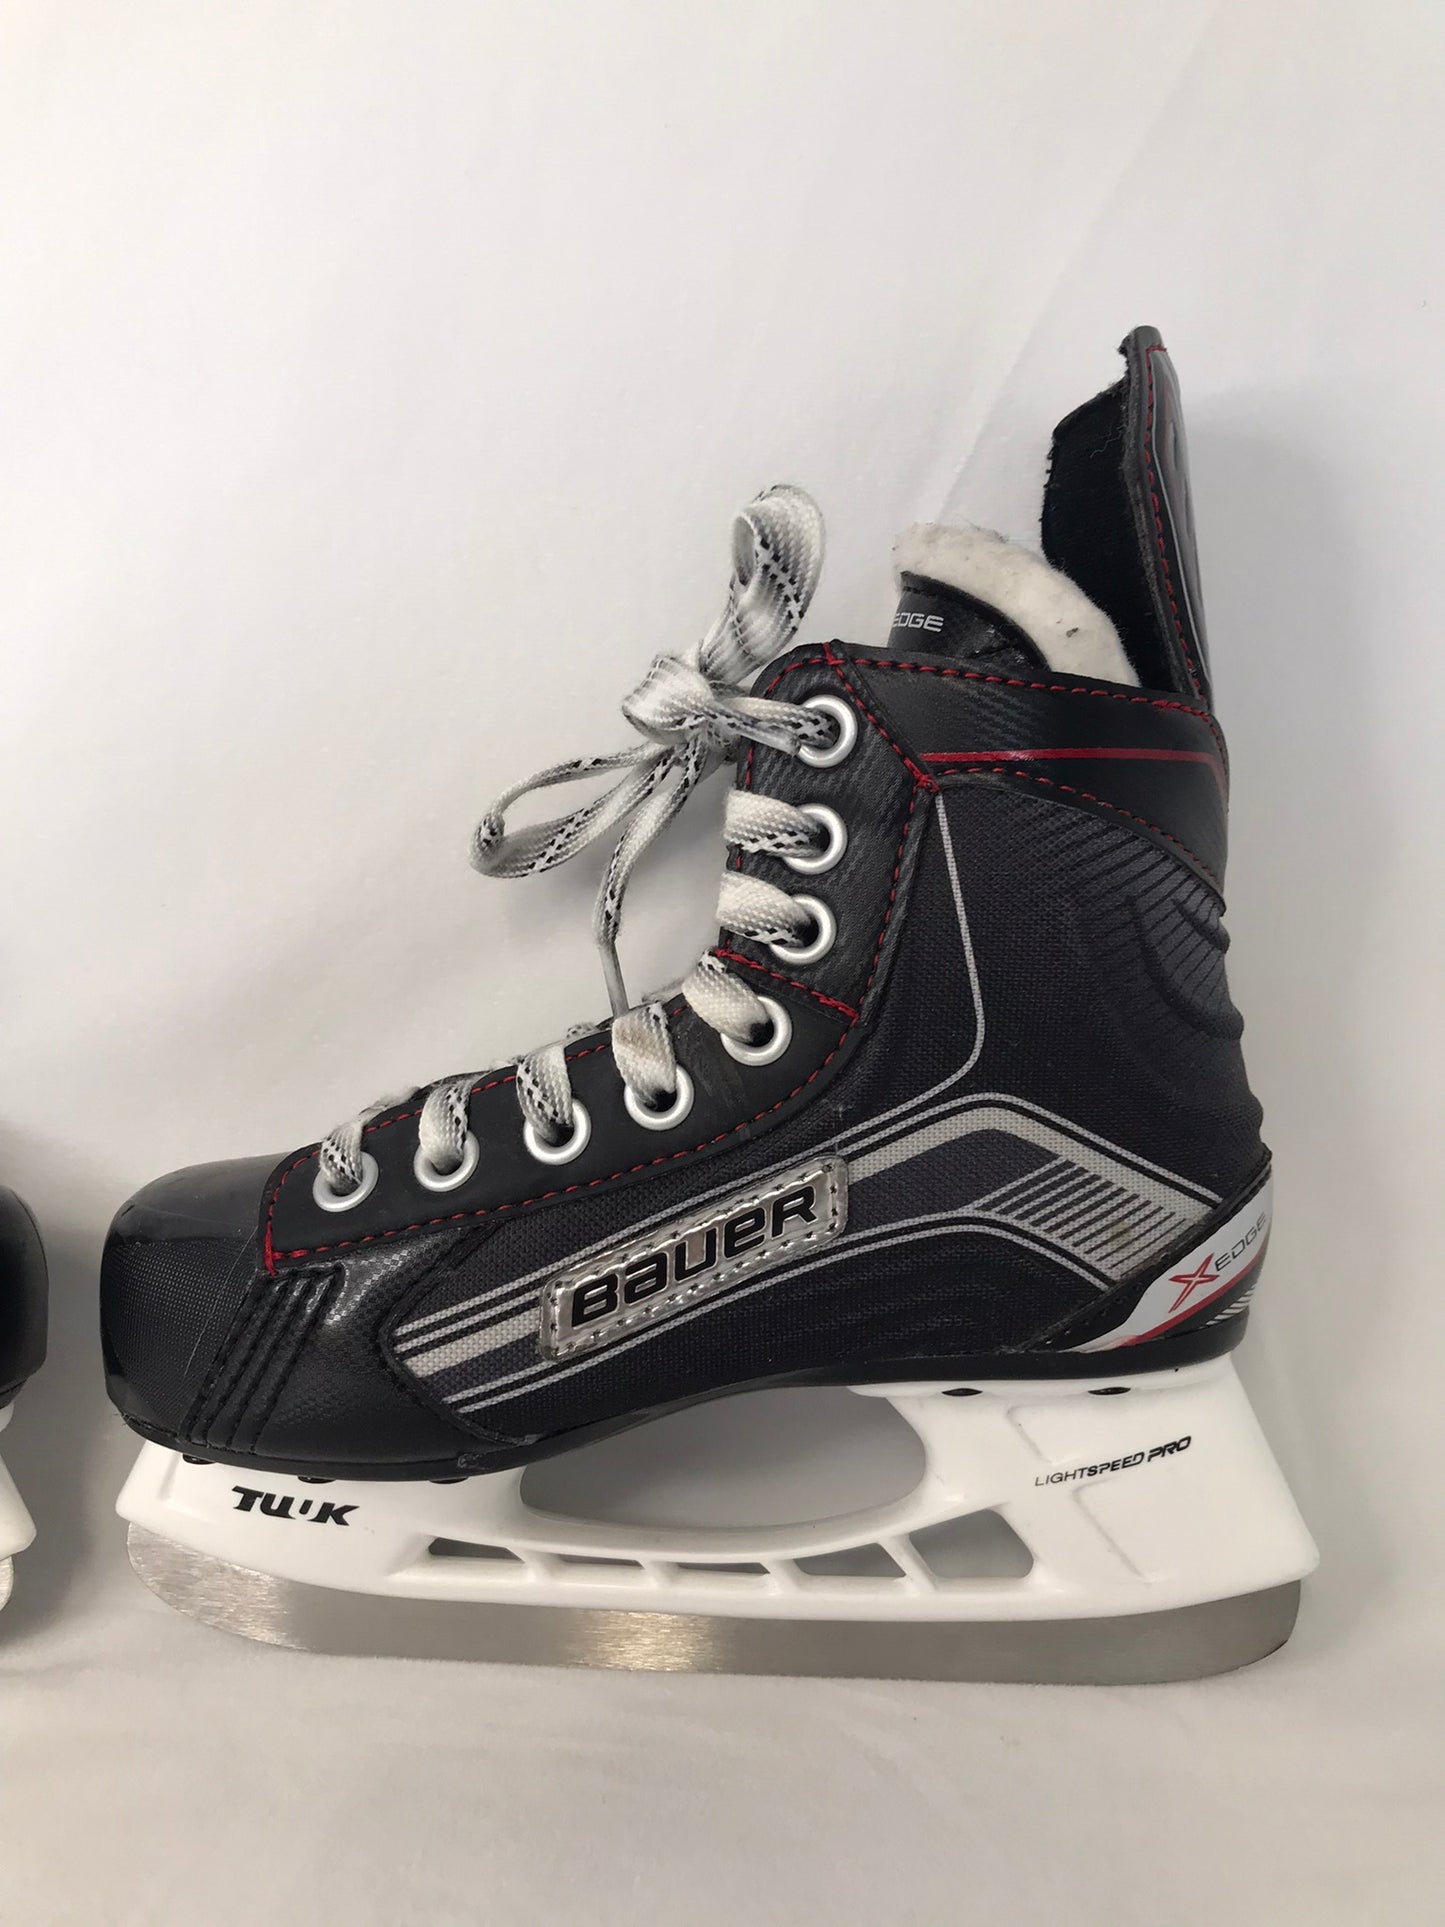 Hockey Skates Child Size 1 Shoe Size Bauer Vapor New Demo Model